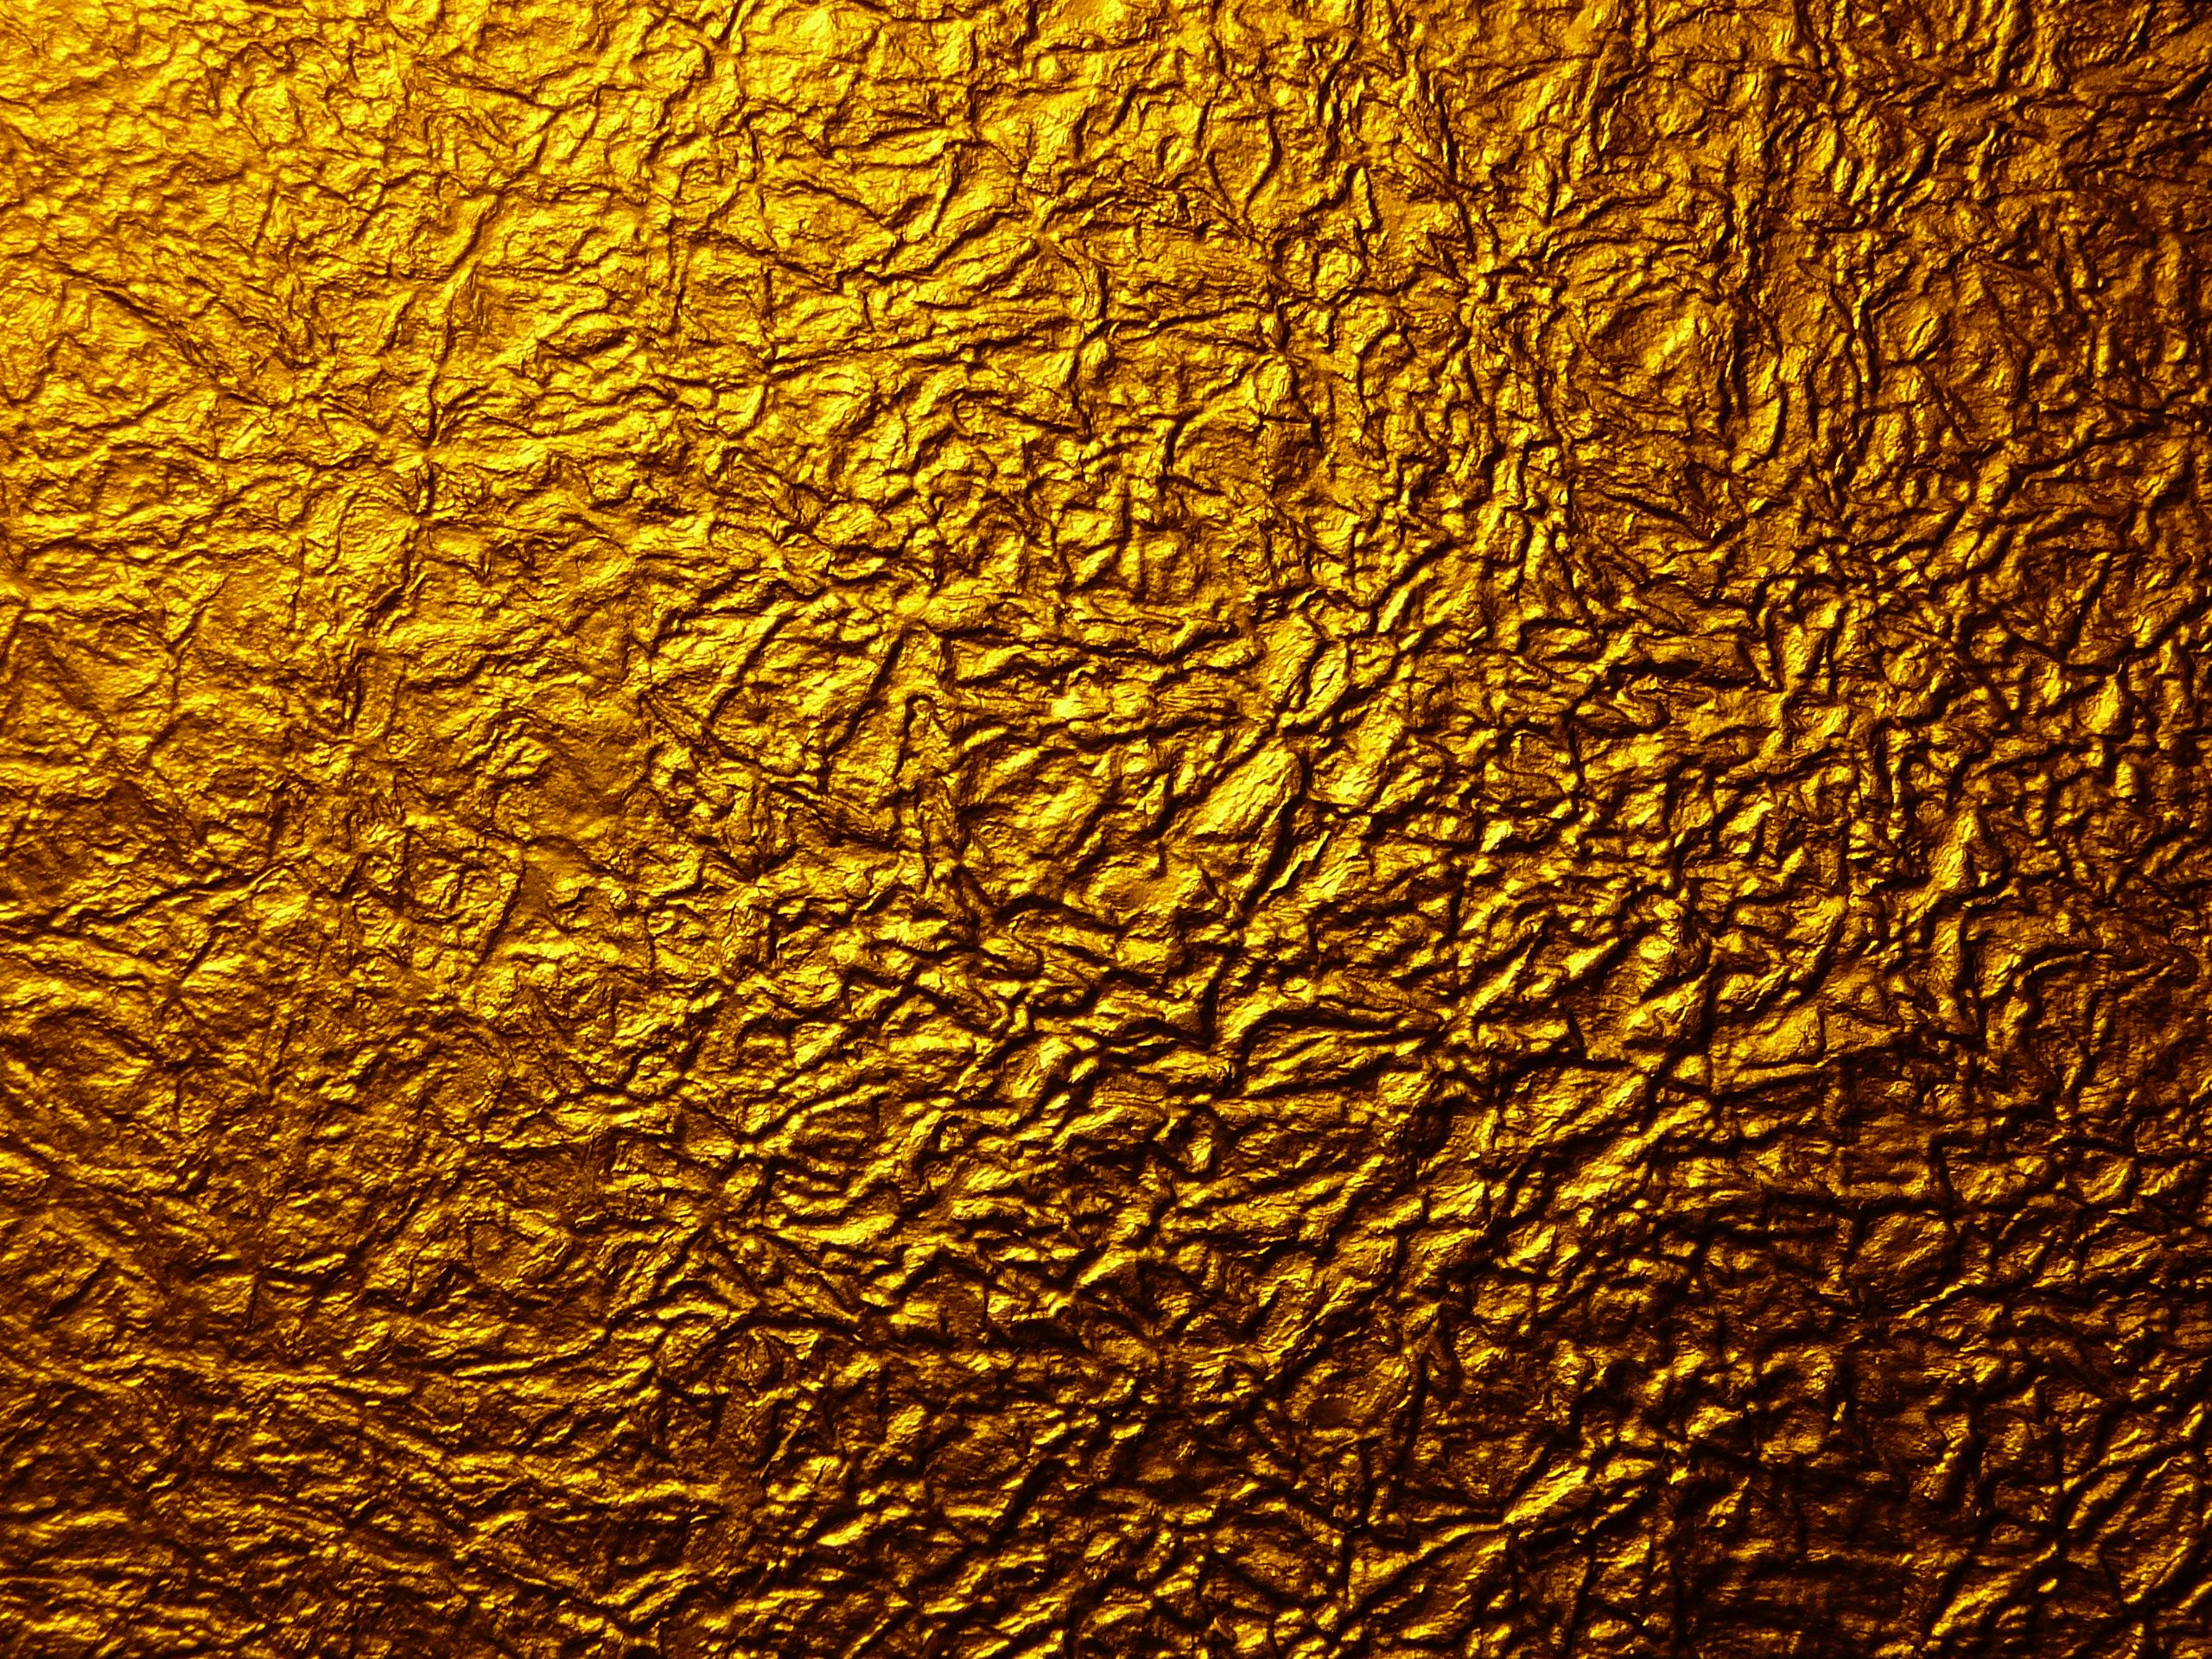 Cool Gold Metallic Wallpaper 23750 2560x1920 px